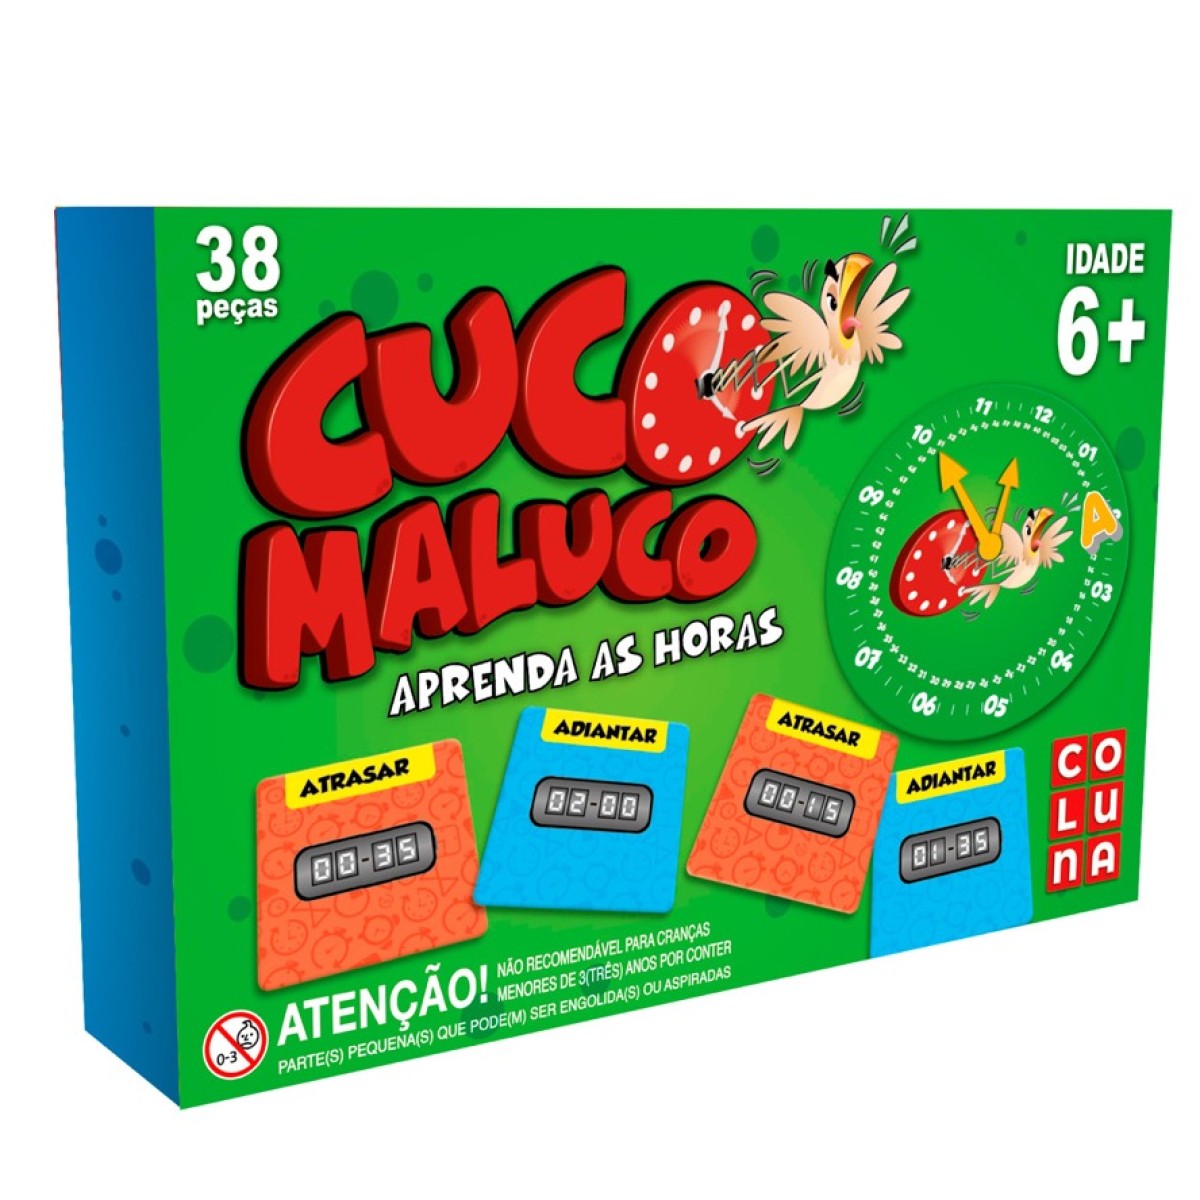 Cuco maluco-906-32003